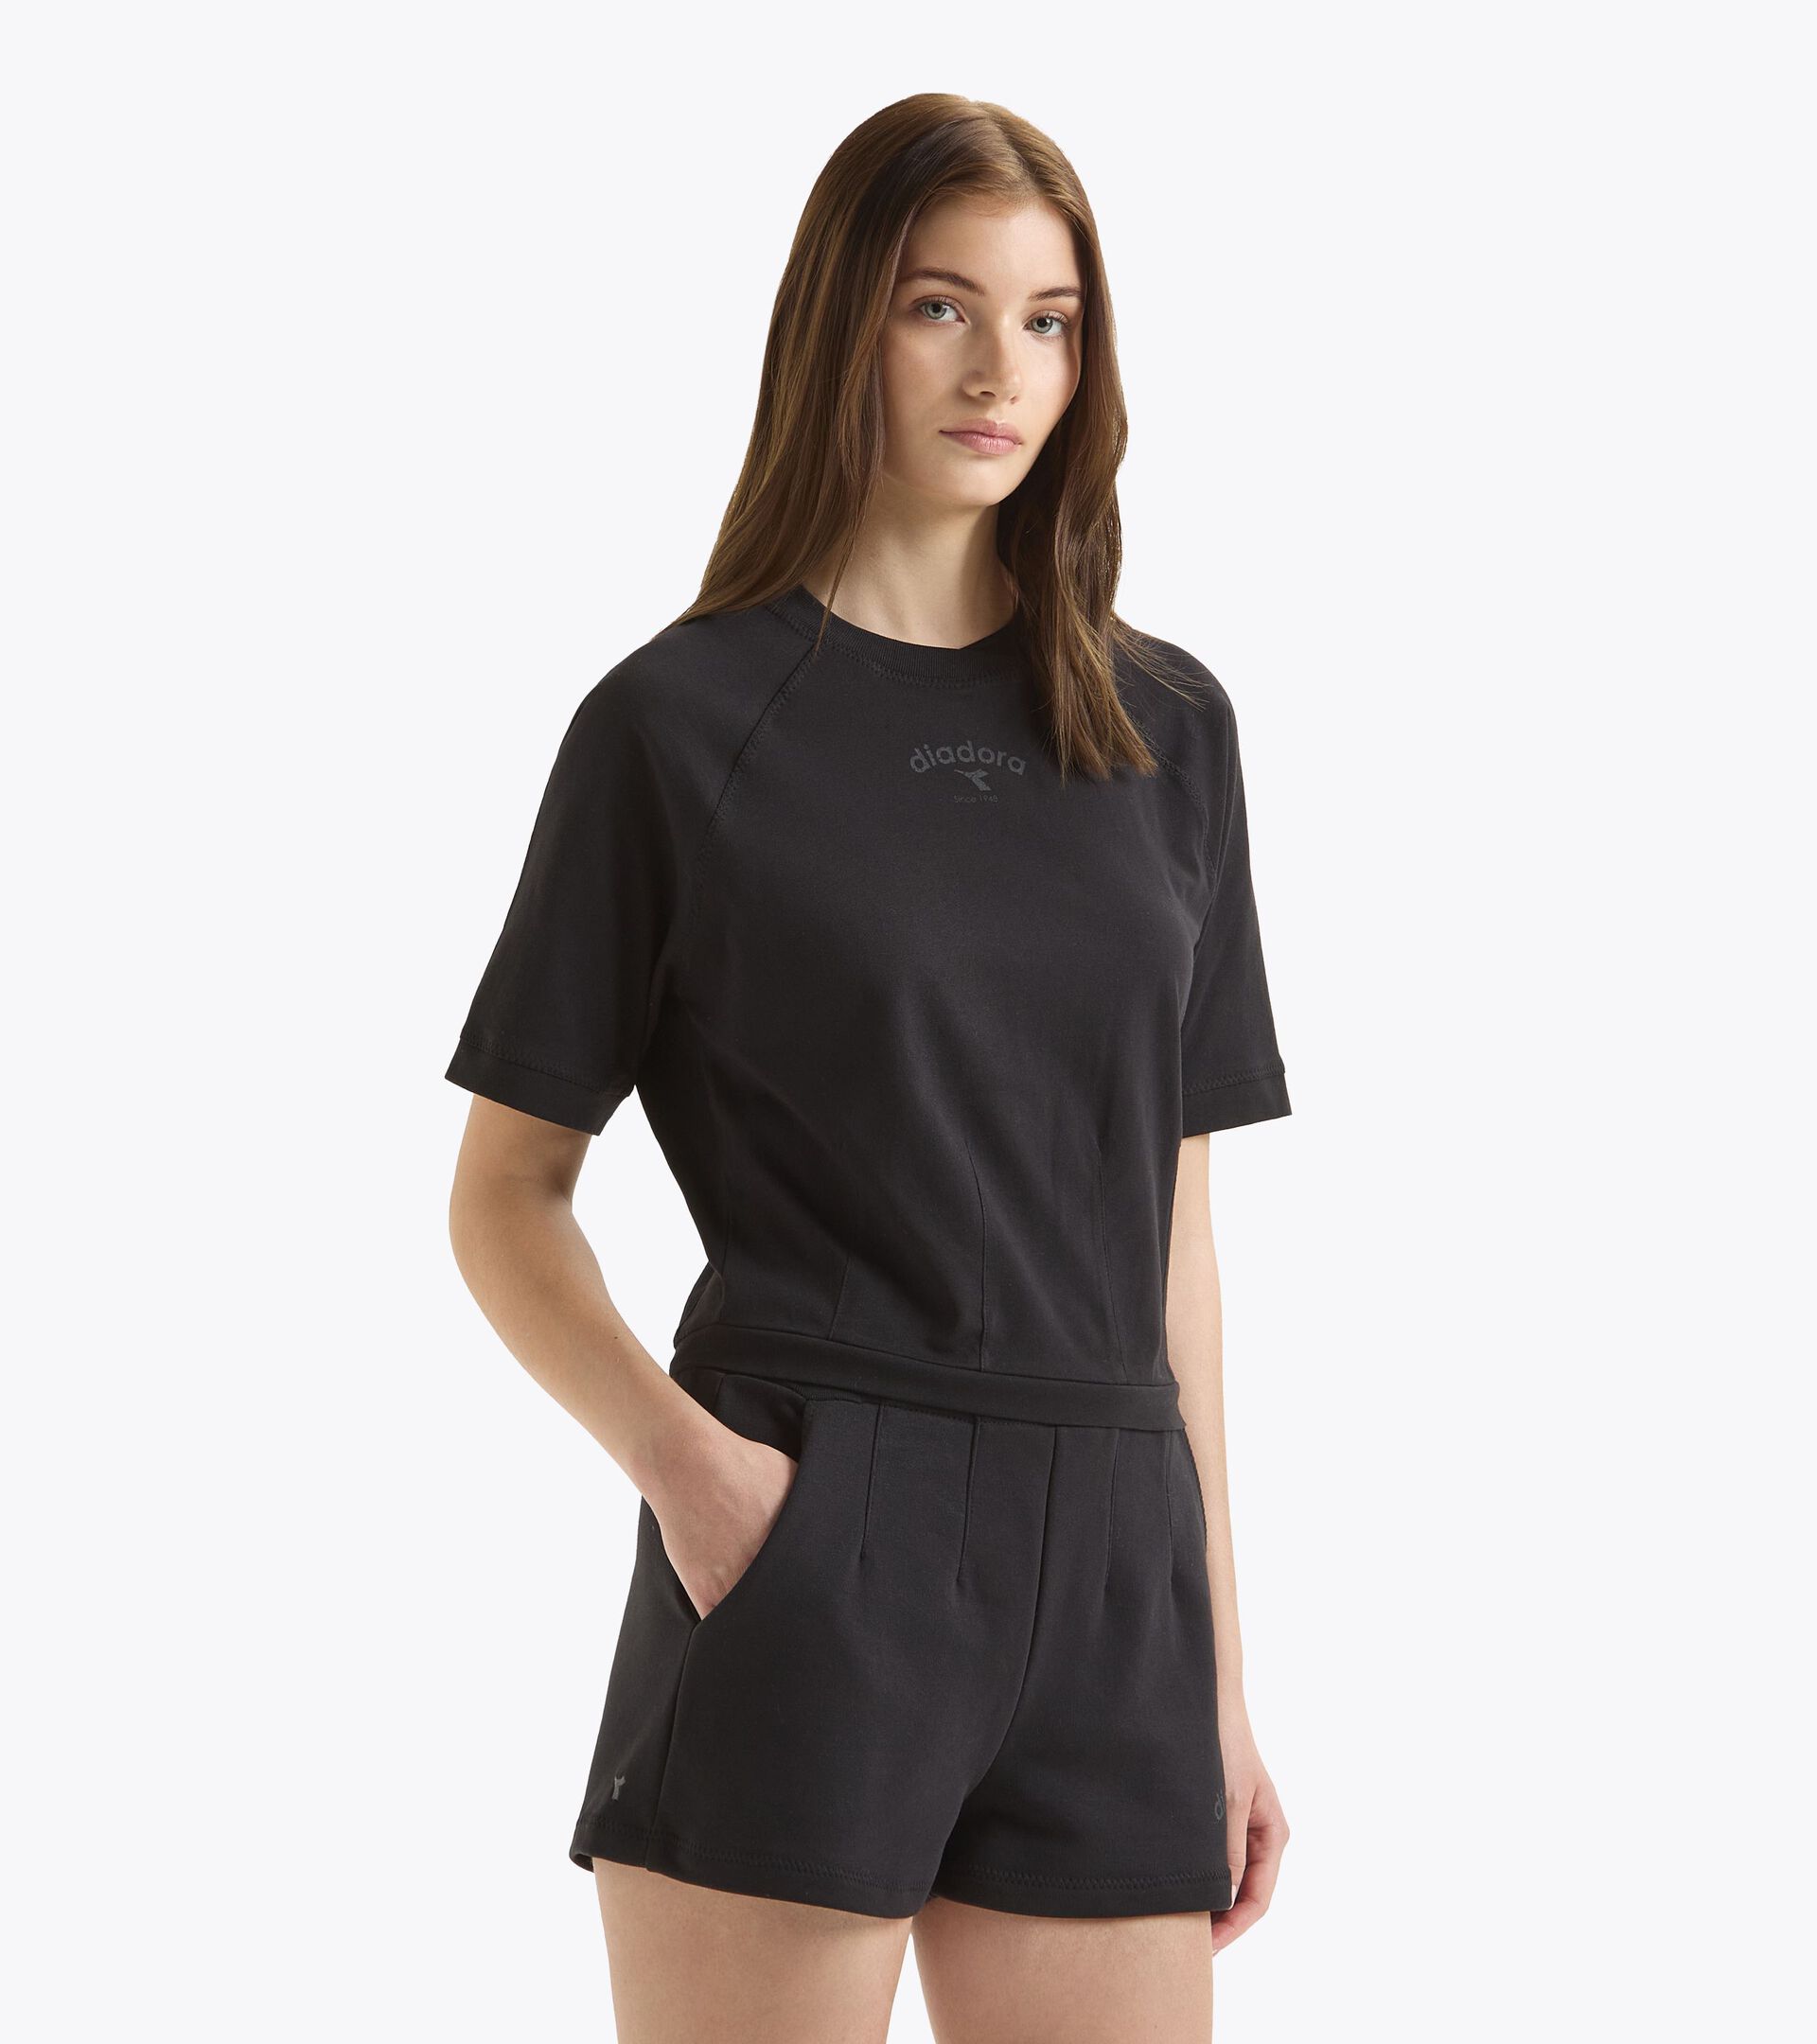 T-shirt with a boxy fit - Women’s L. T-SHIRT SS ATHL. LOGO BLACK - Diadora